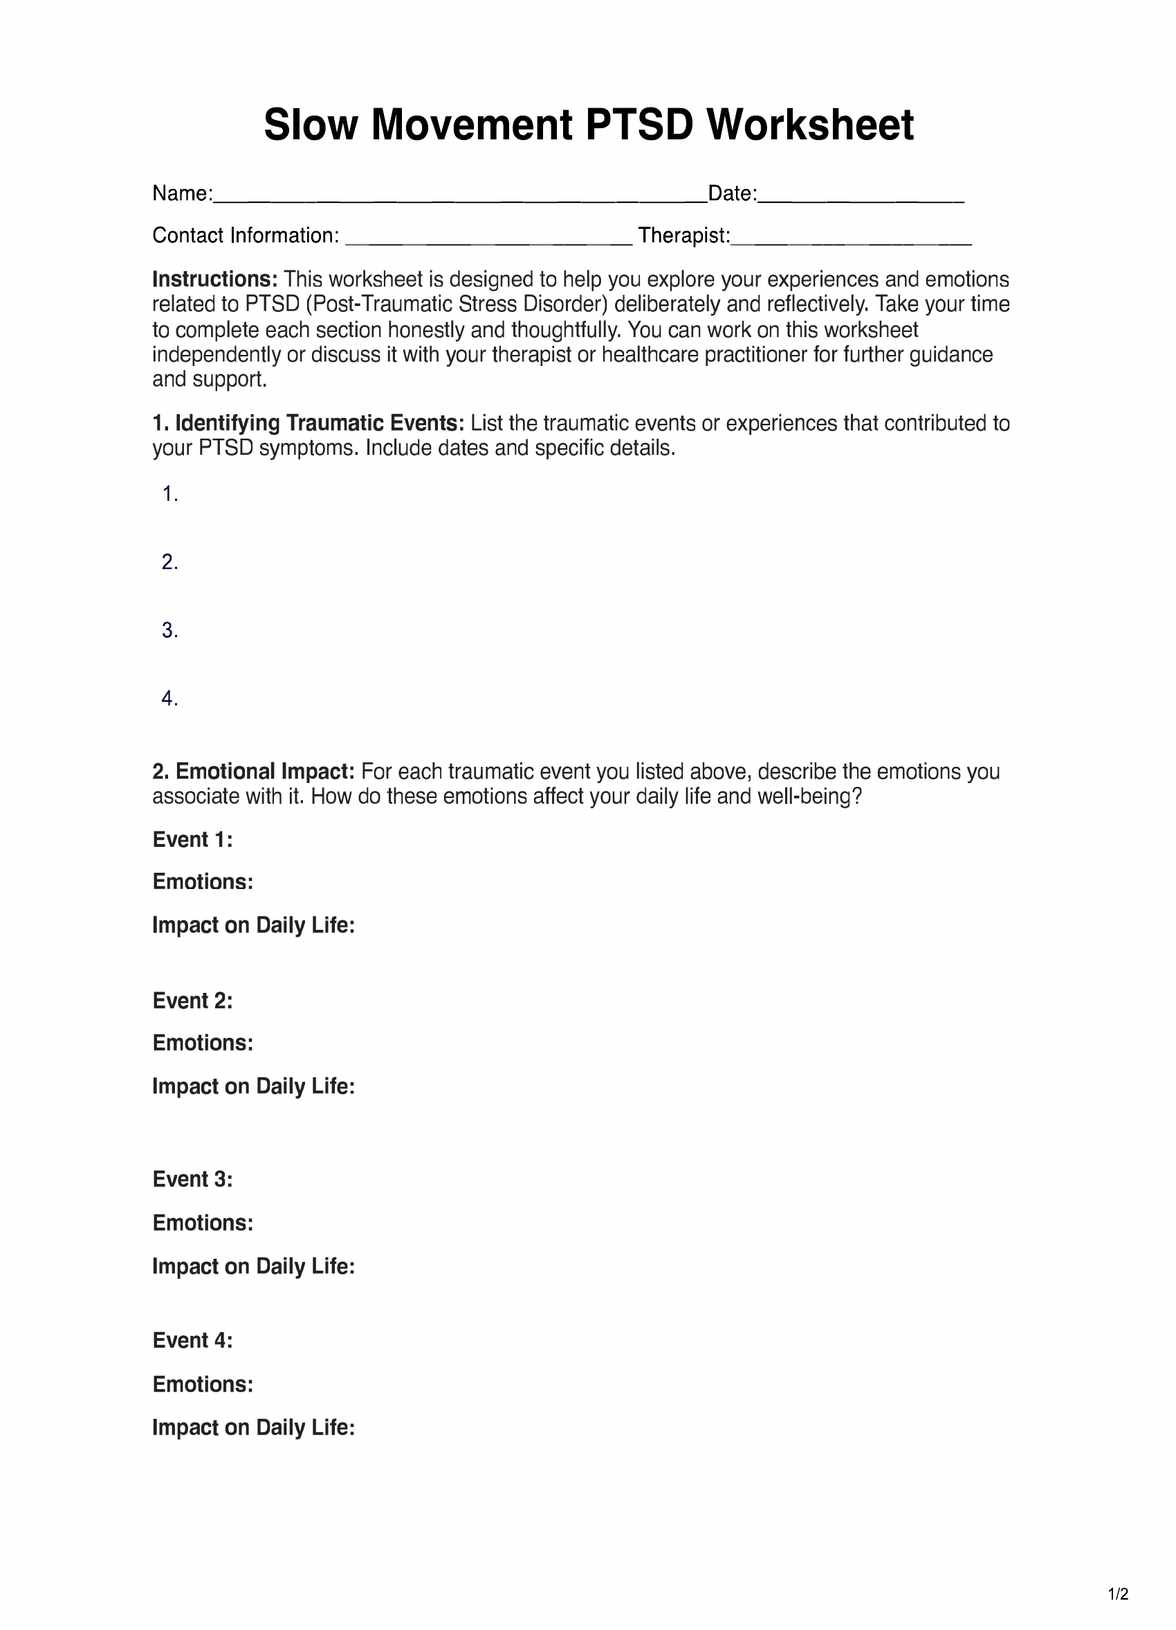 Slow Movement PTSD Worksheet PDF Example